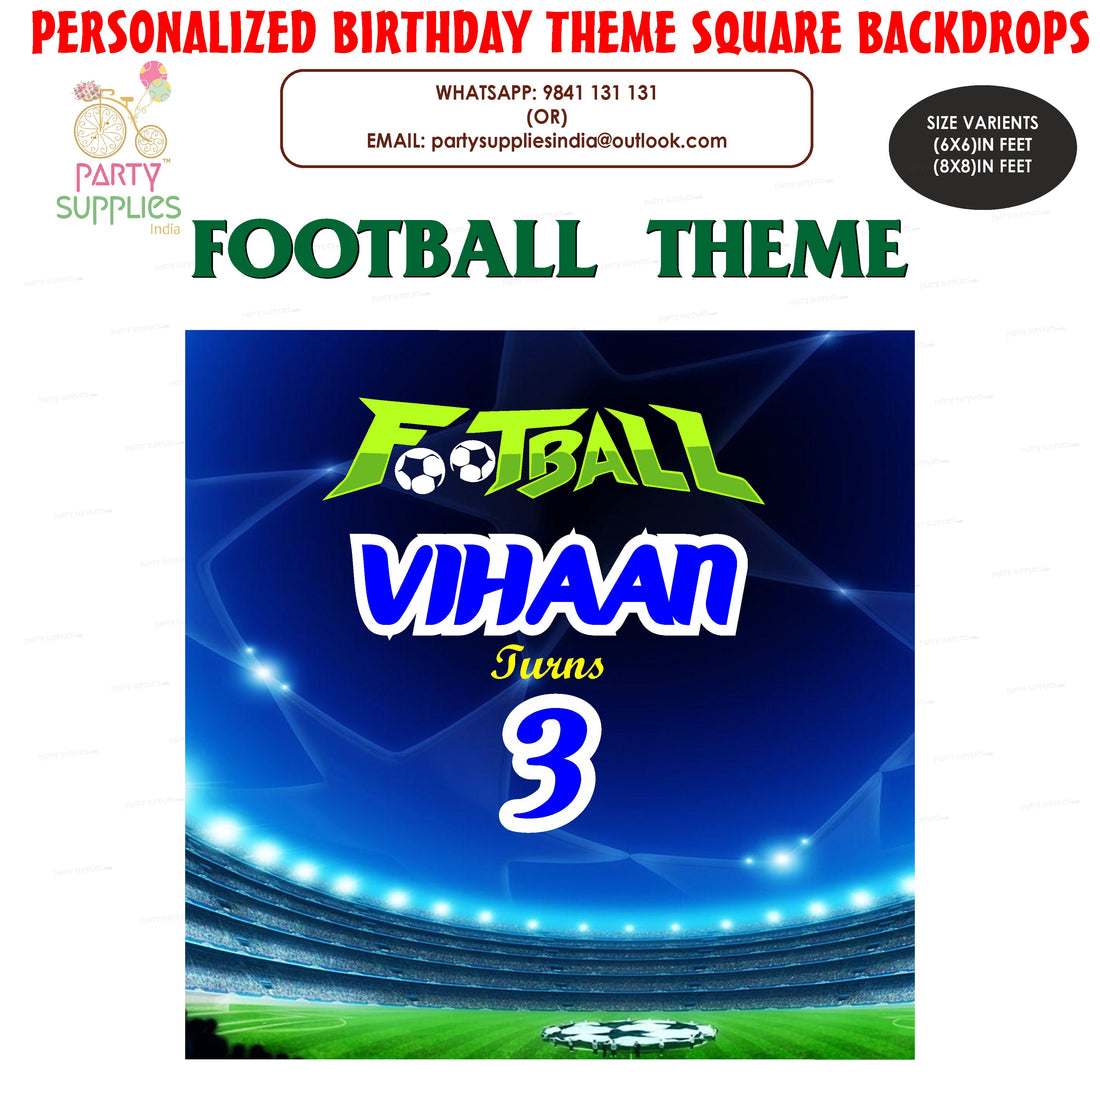 PSI Football Theme Personalized  Square Backdrop